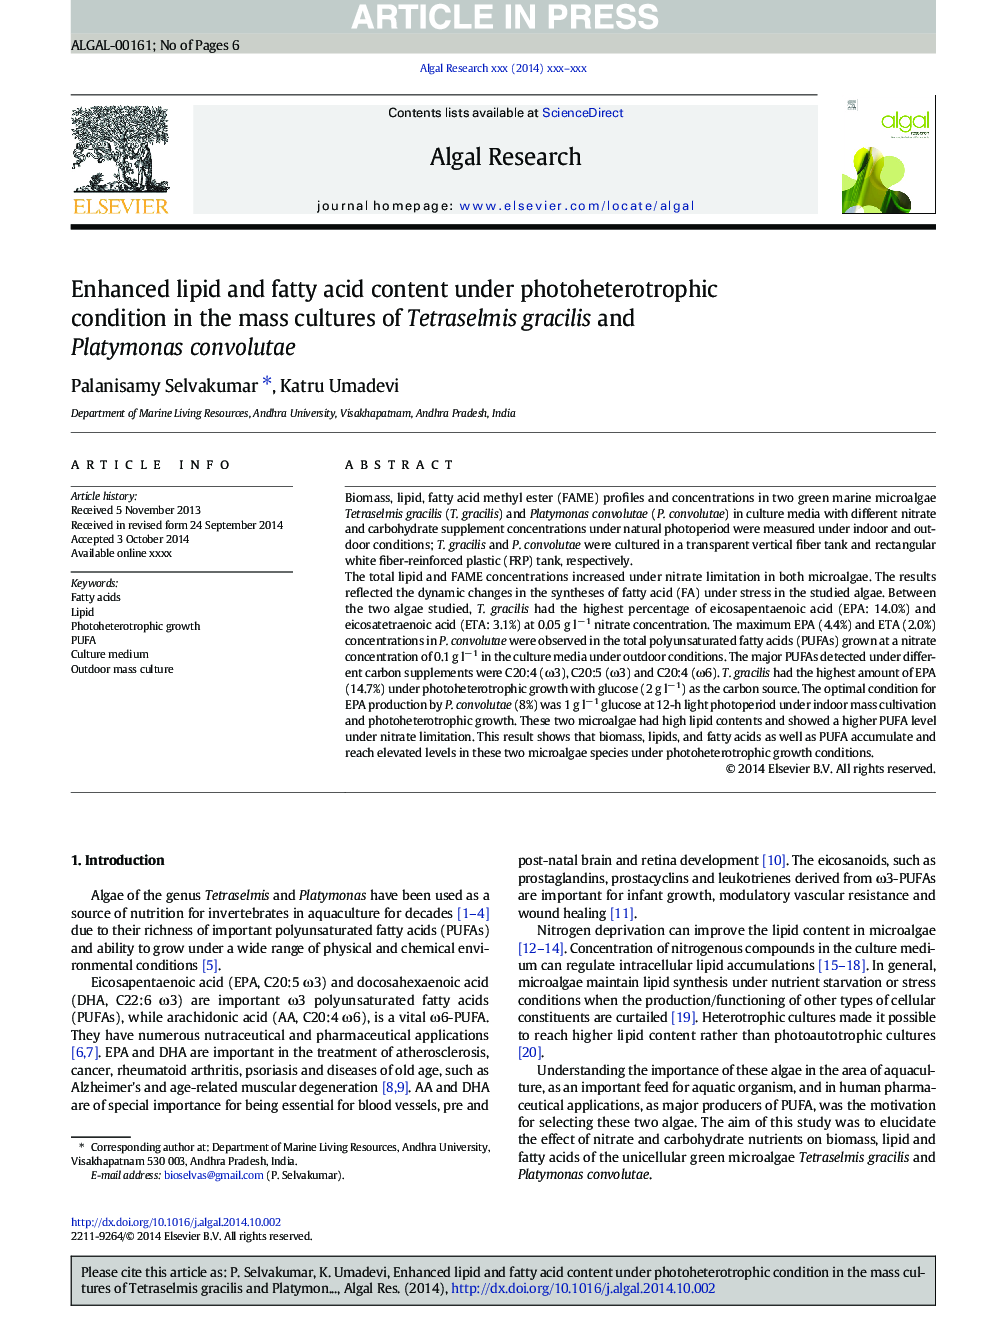 Enhanced lipid and fatty acid content under photoheterotrophic condition in the mass cultures of Tetraselmis gracilis and Platymonas convolutae